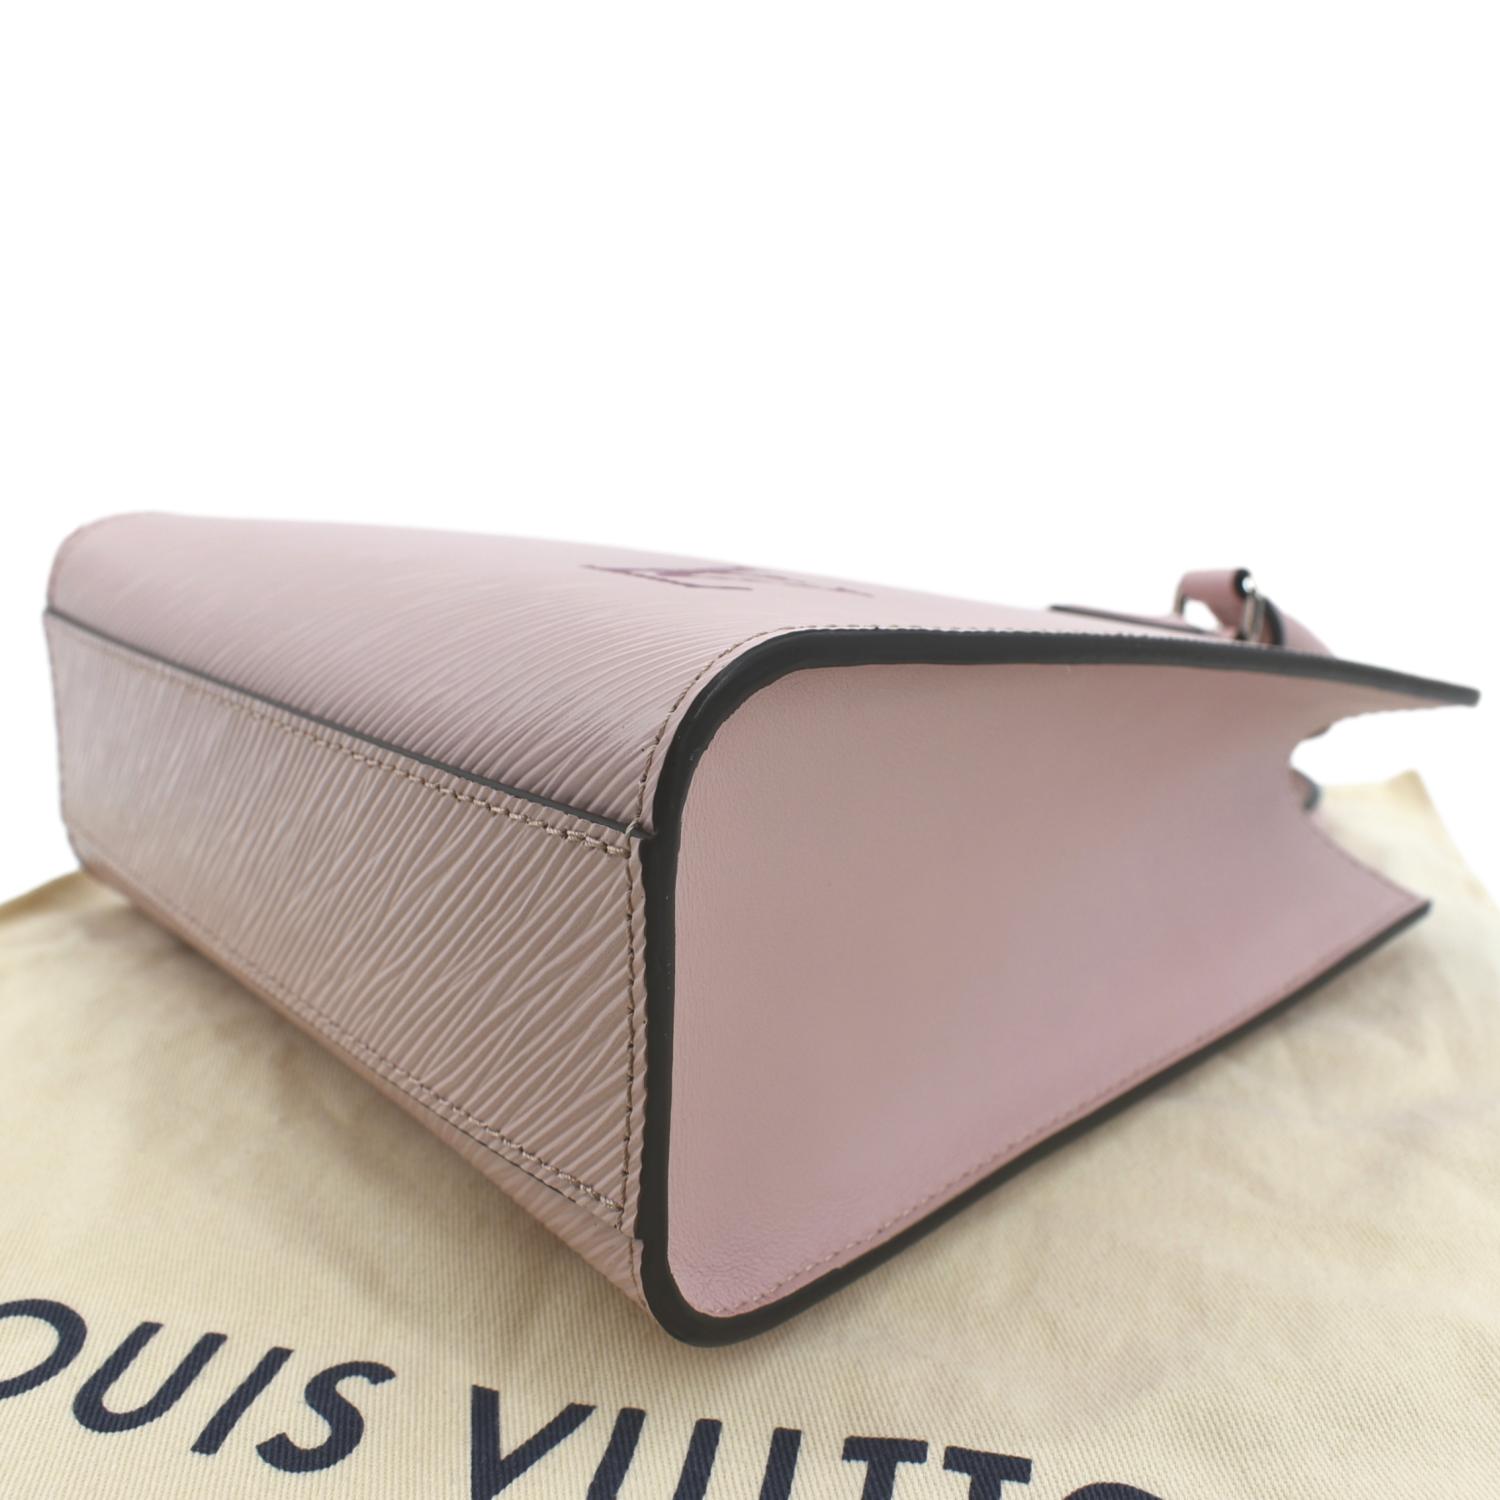 Louis Vuitton Sac Plat BB, Pink, One Size